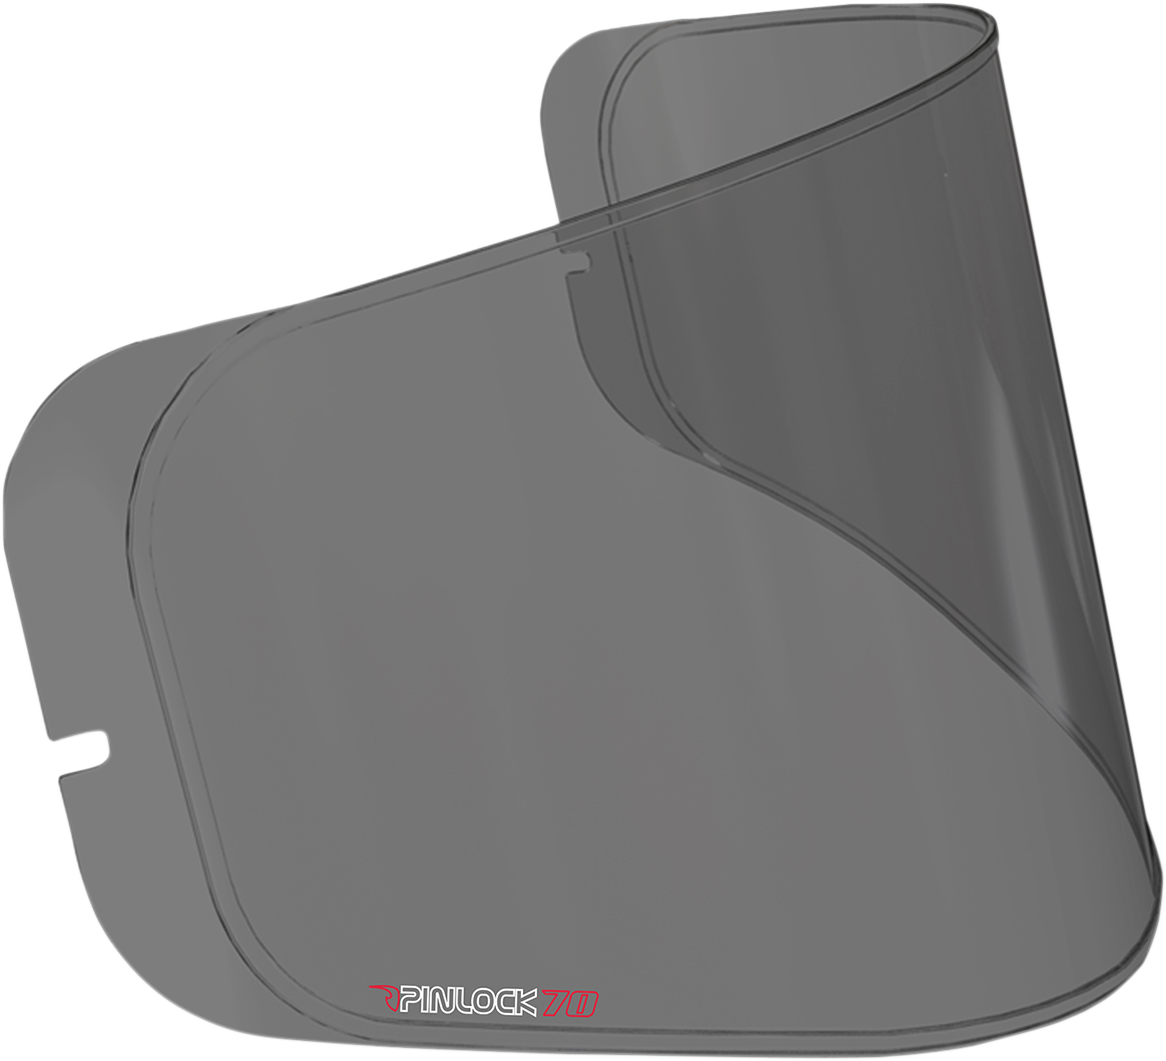 ICON Pinlock® Insert Lens - Optics™ - Airform/Airmada/Airframe Pro™ - Dark Smoke 0130-0701